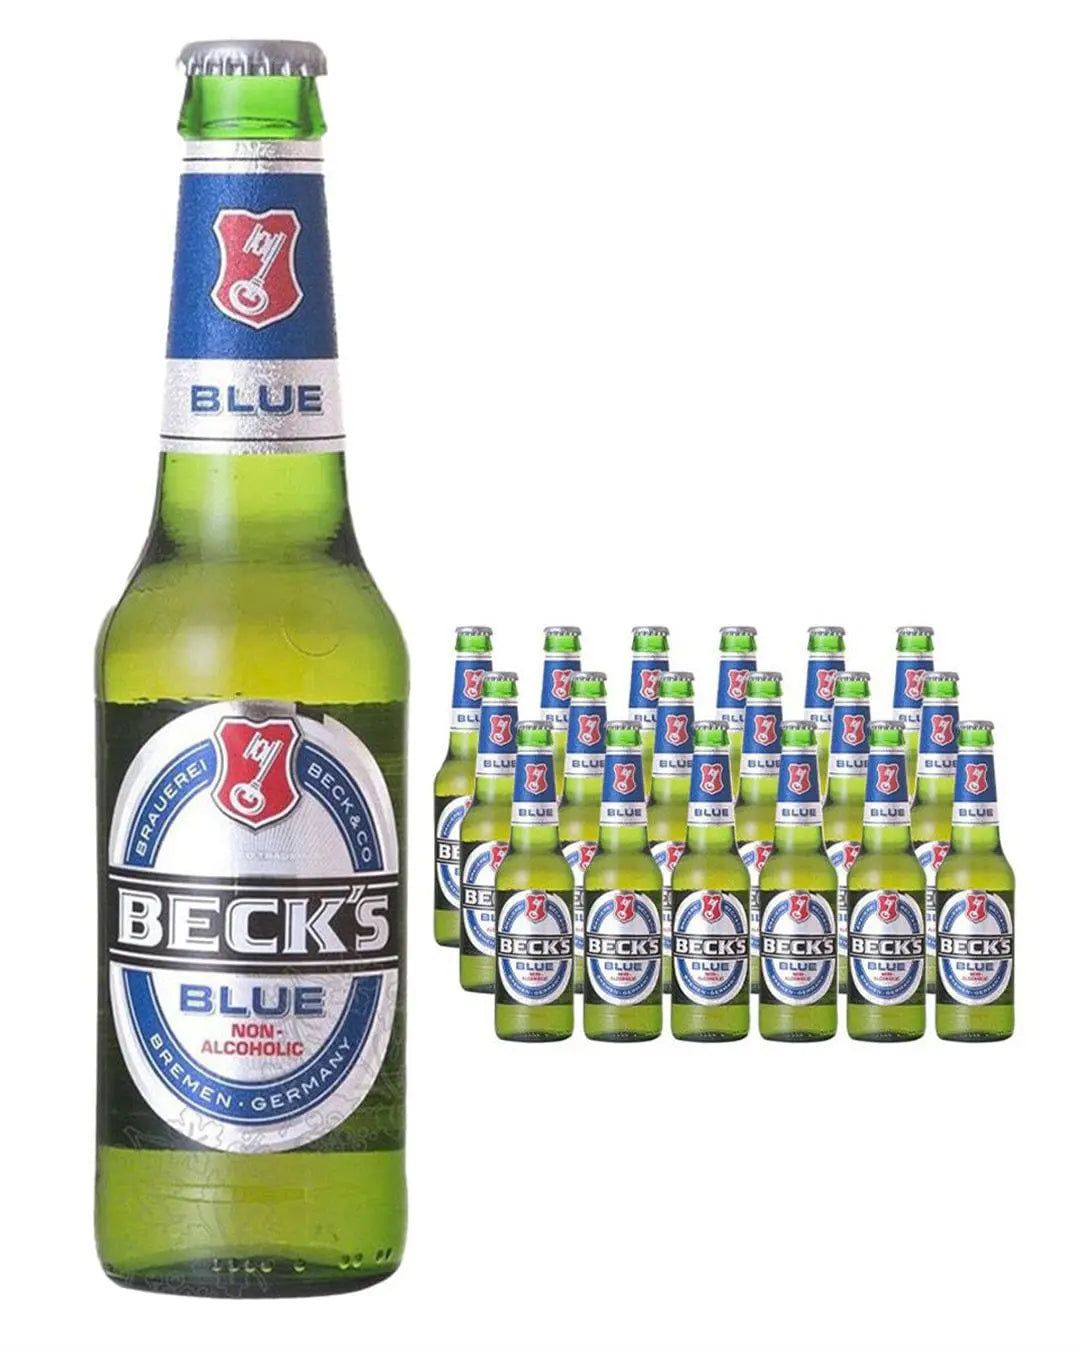 Becks Blue Alcohol Free Beer Bottle Multipack, 24 x 275 ml Beer